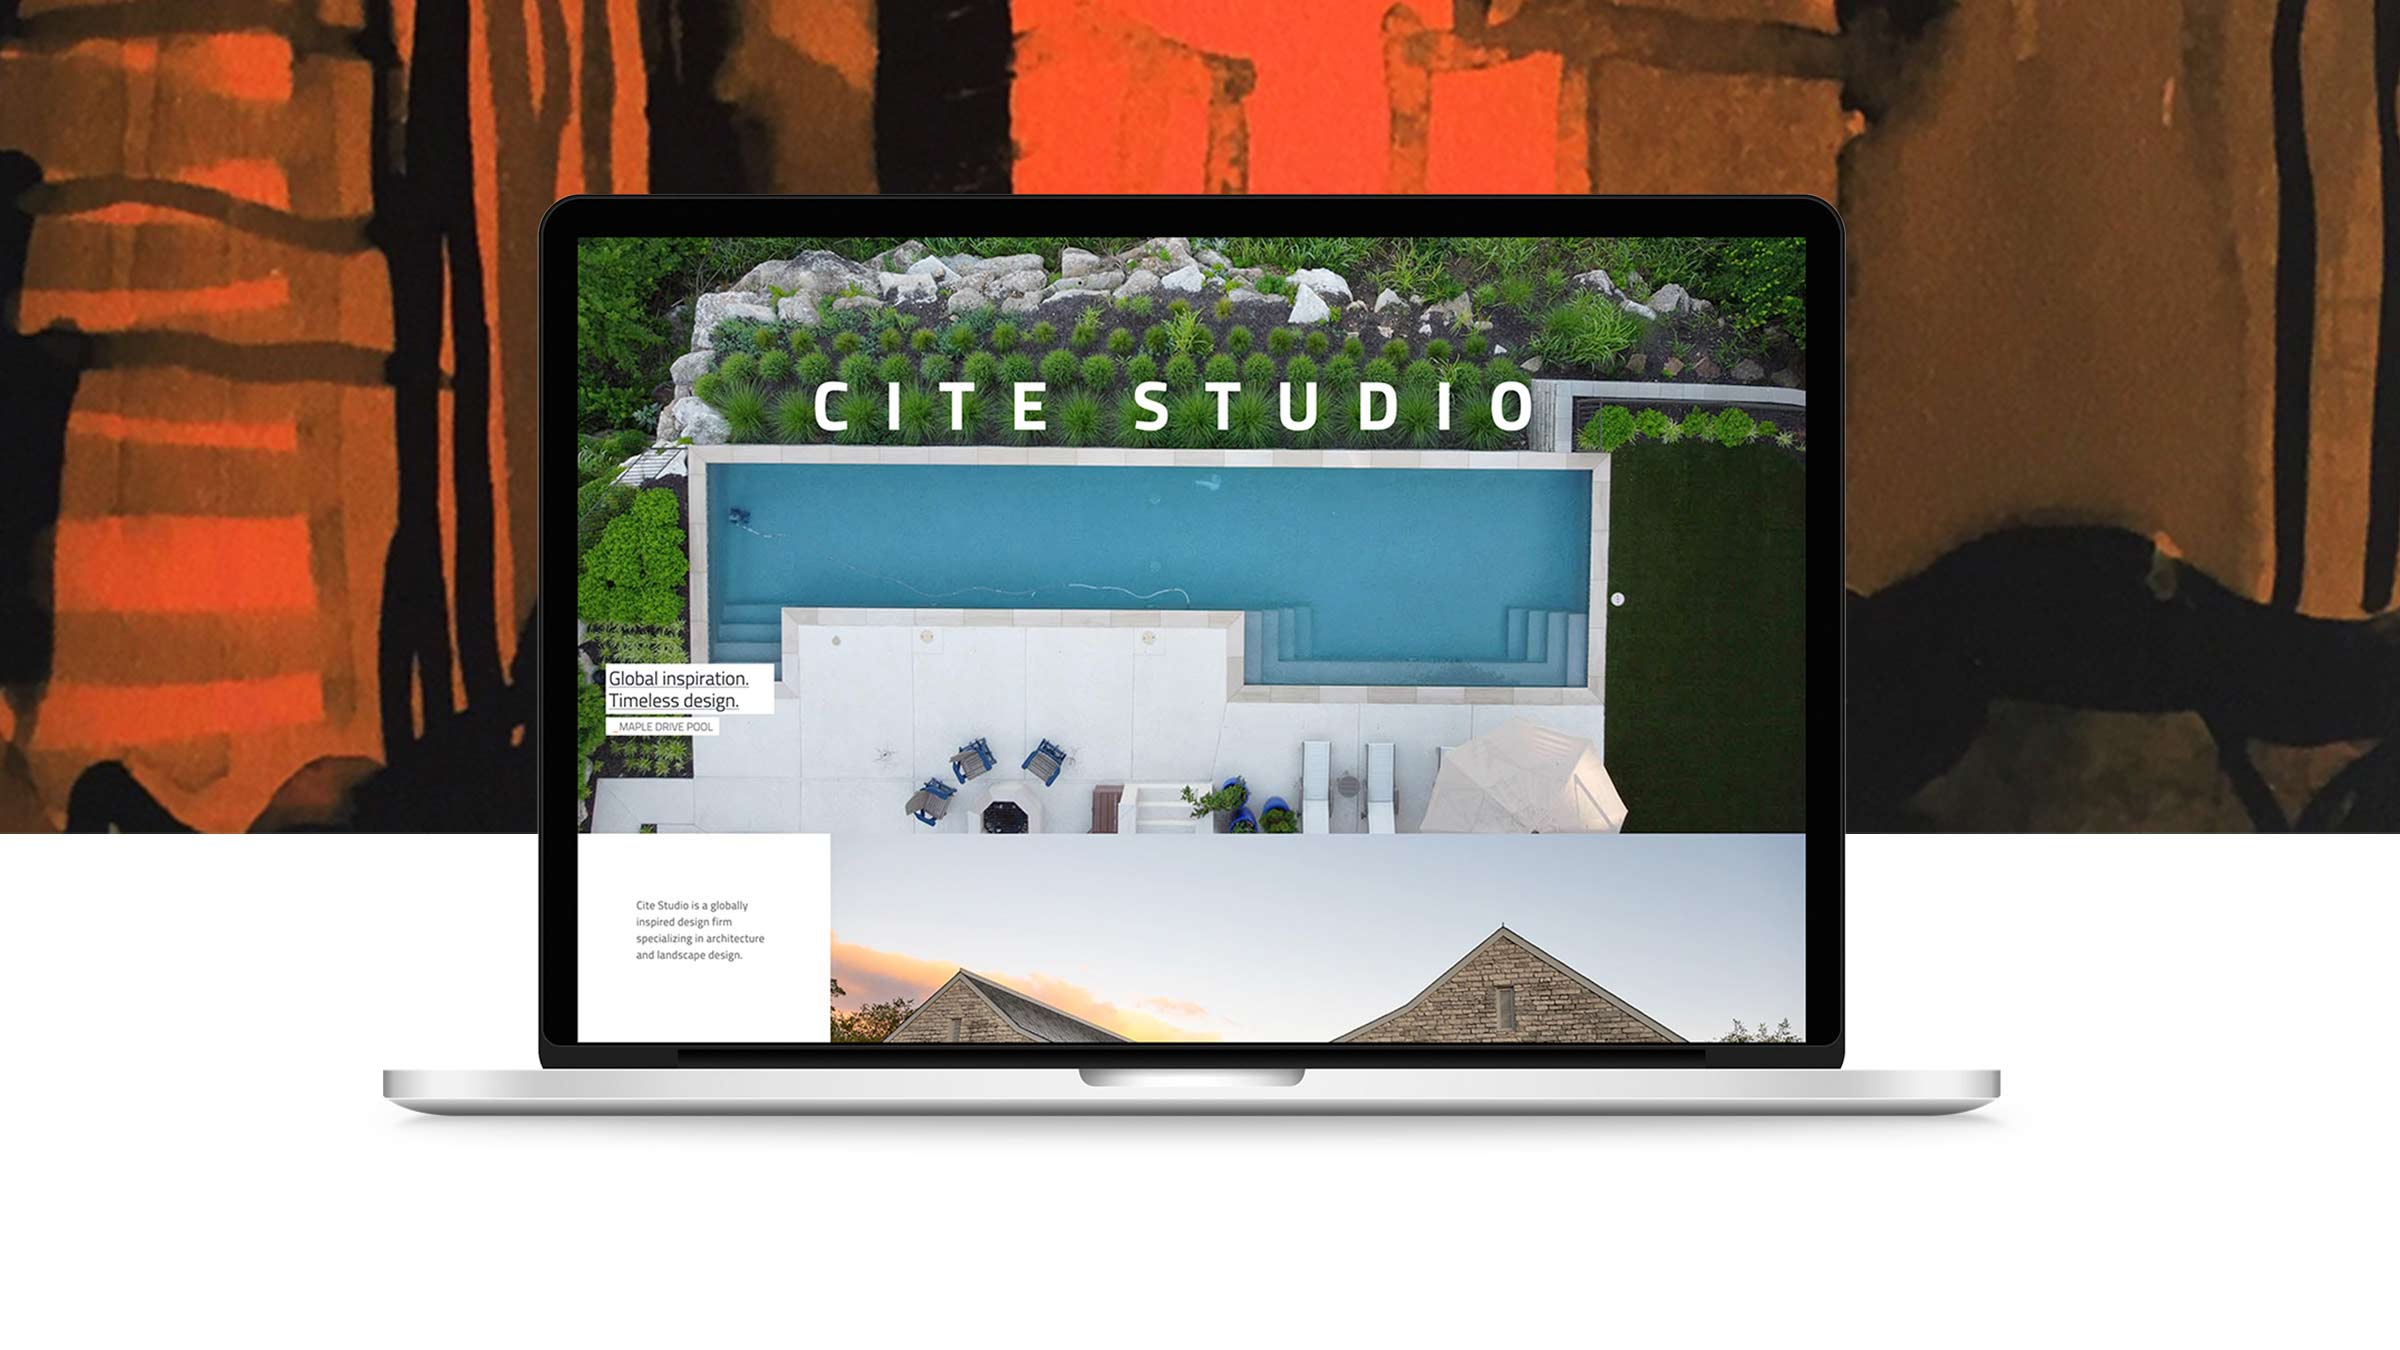 The Cite Studio architecture and landscape design website on a laptop